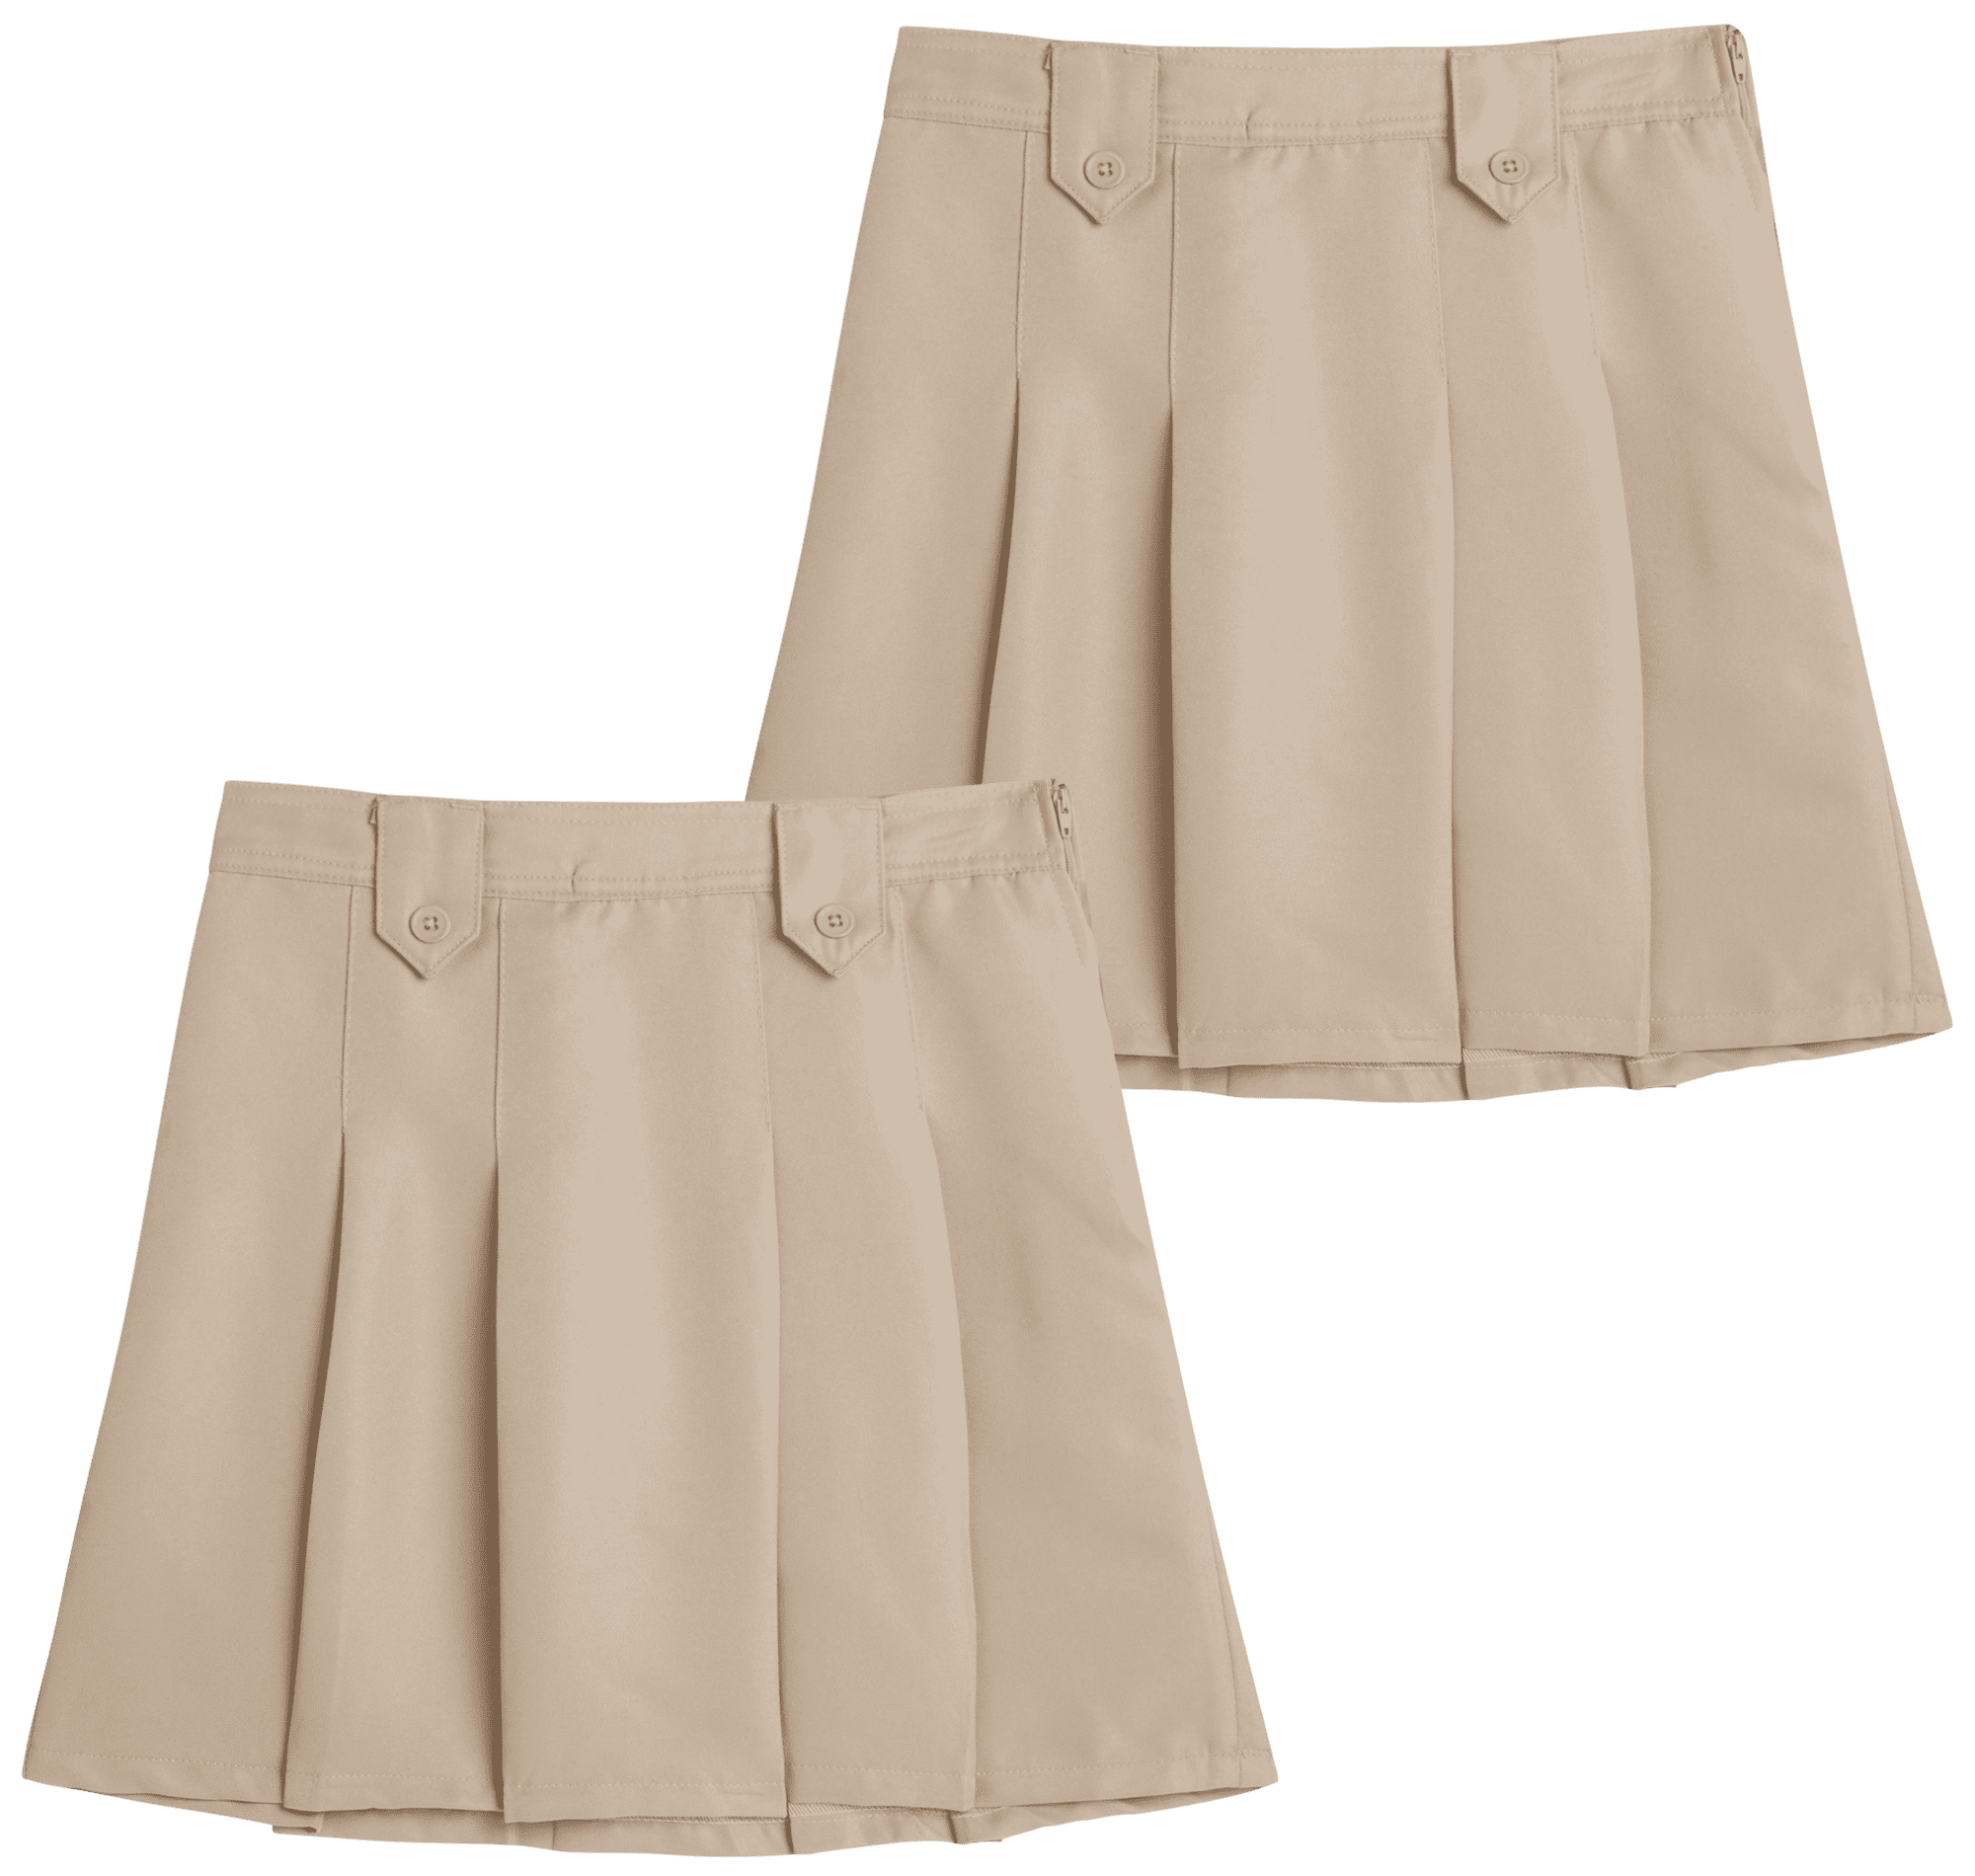 Cat & Jack kids size 10/12 gray pull on shorts | Shorts under dress, Baby  boy shorts, Clothes design